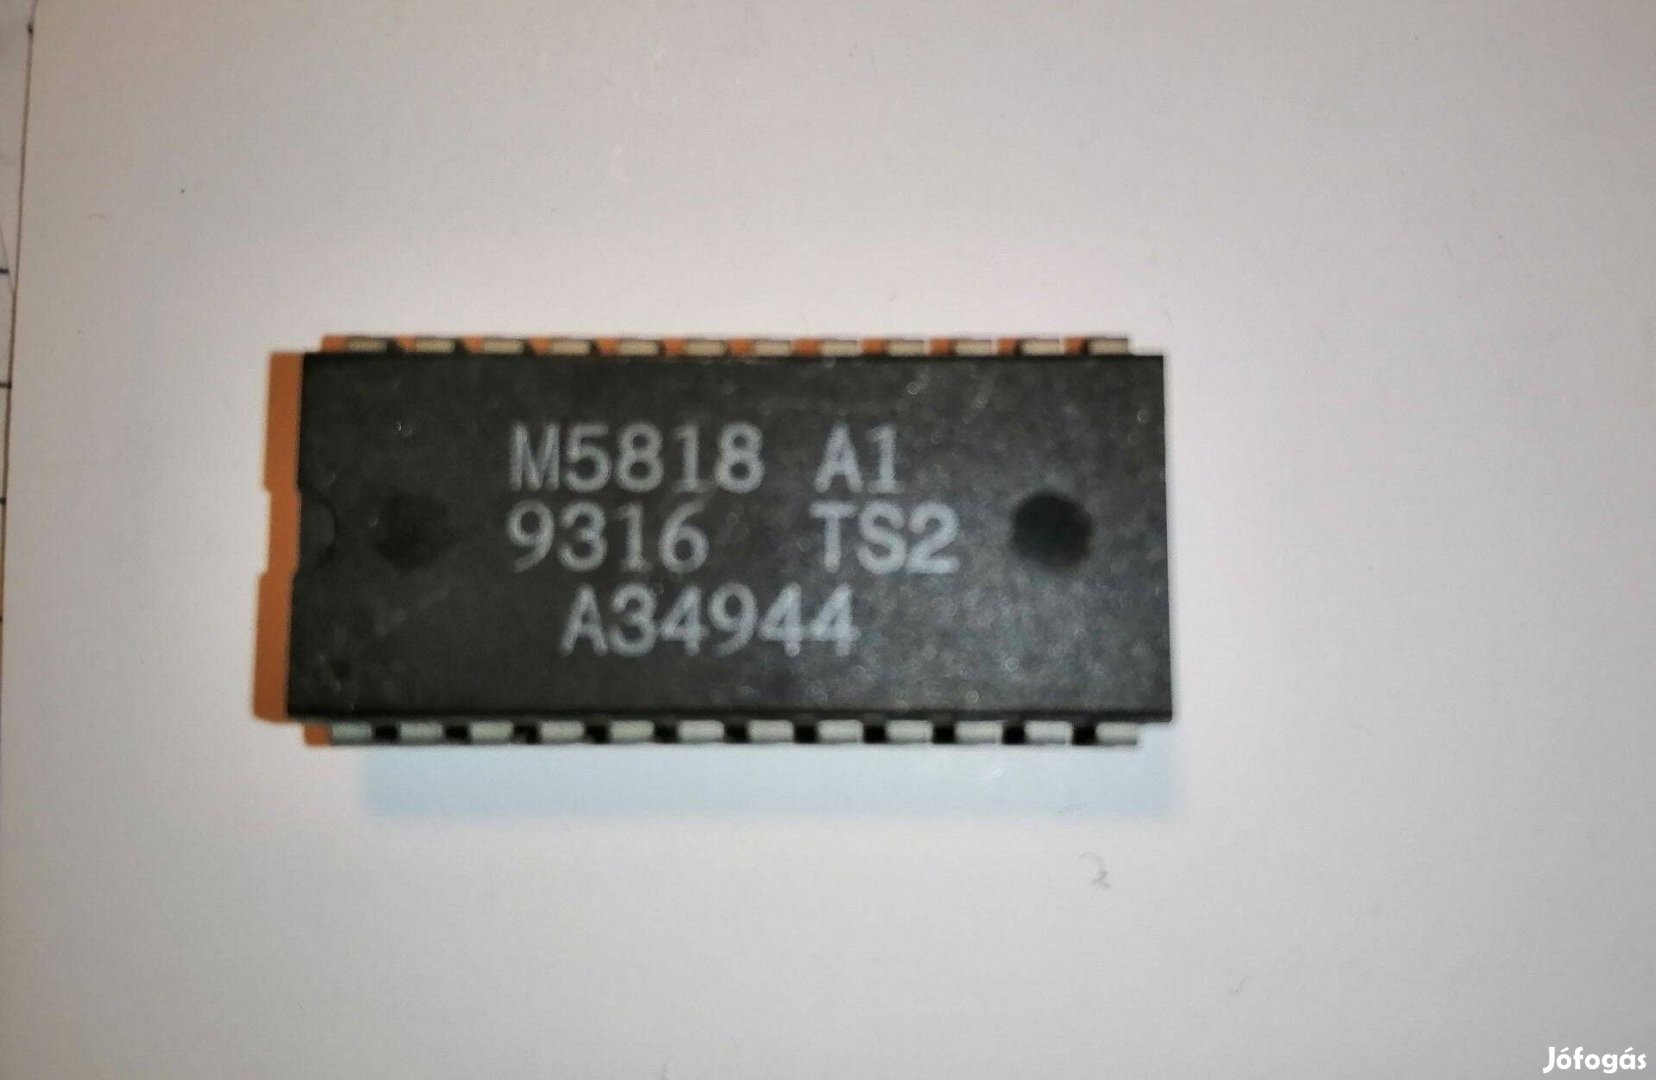 M5818 A1 9316 TS2 Chip